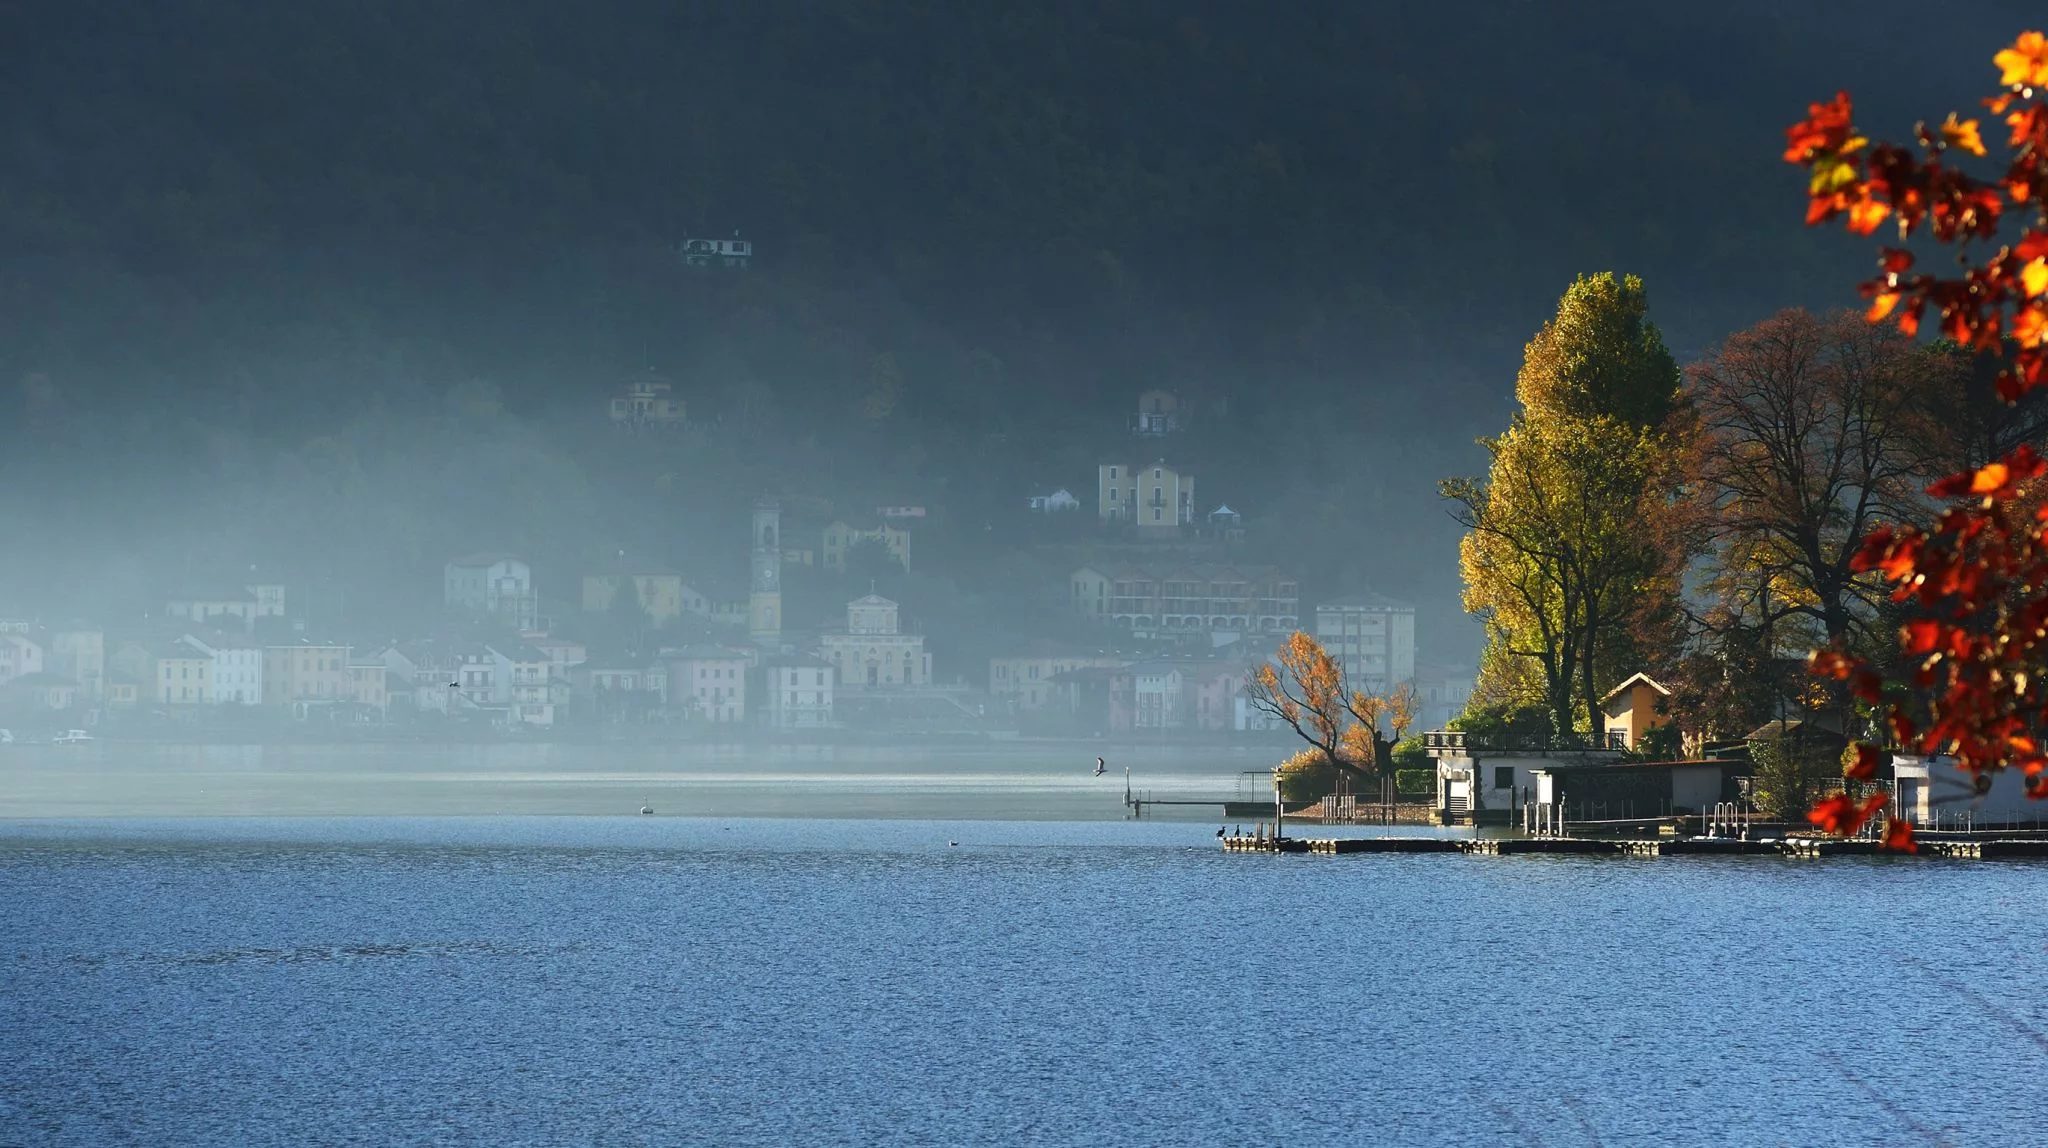 the lake of Lugano (CH) from Lavena and Porto Ceresio (IT), Italy